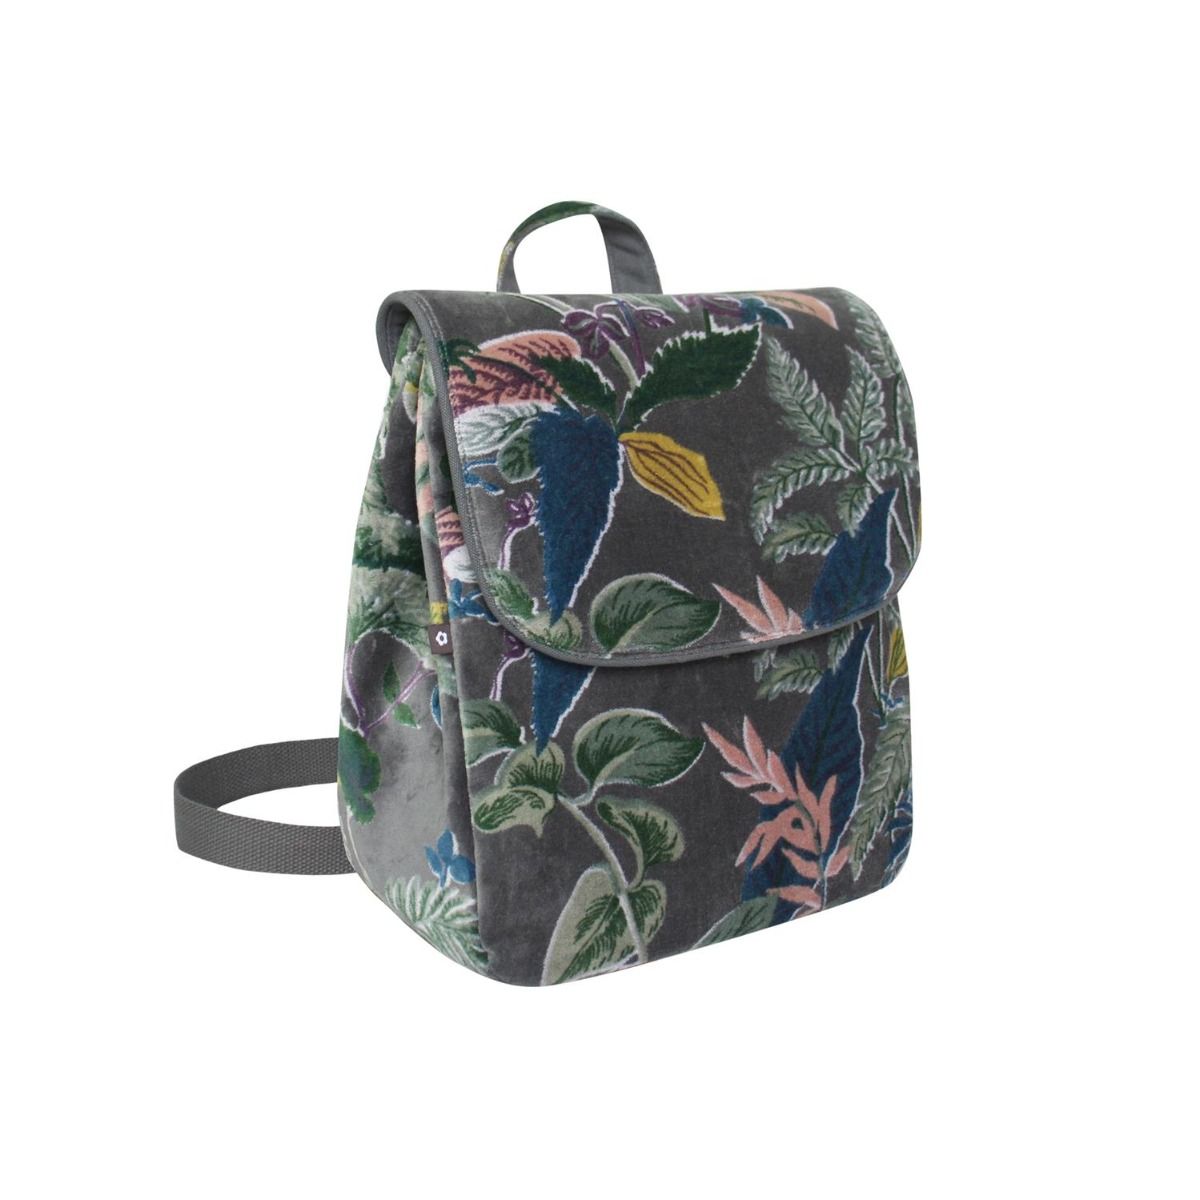 Grey Botanical Backpack - The Nancy Smillie Shop - Art, Jewellery & Designer Gifts Glasgow